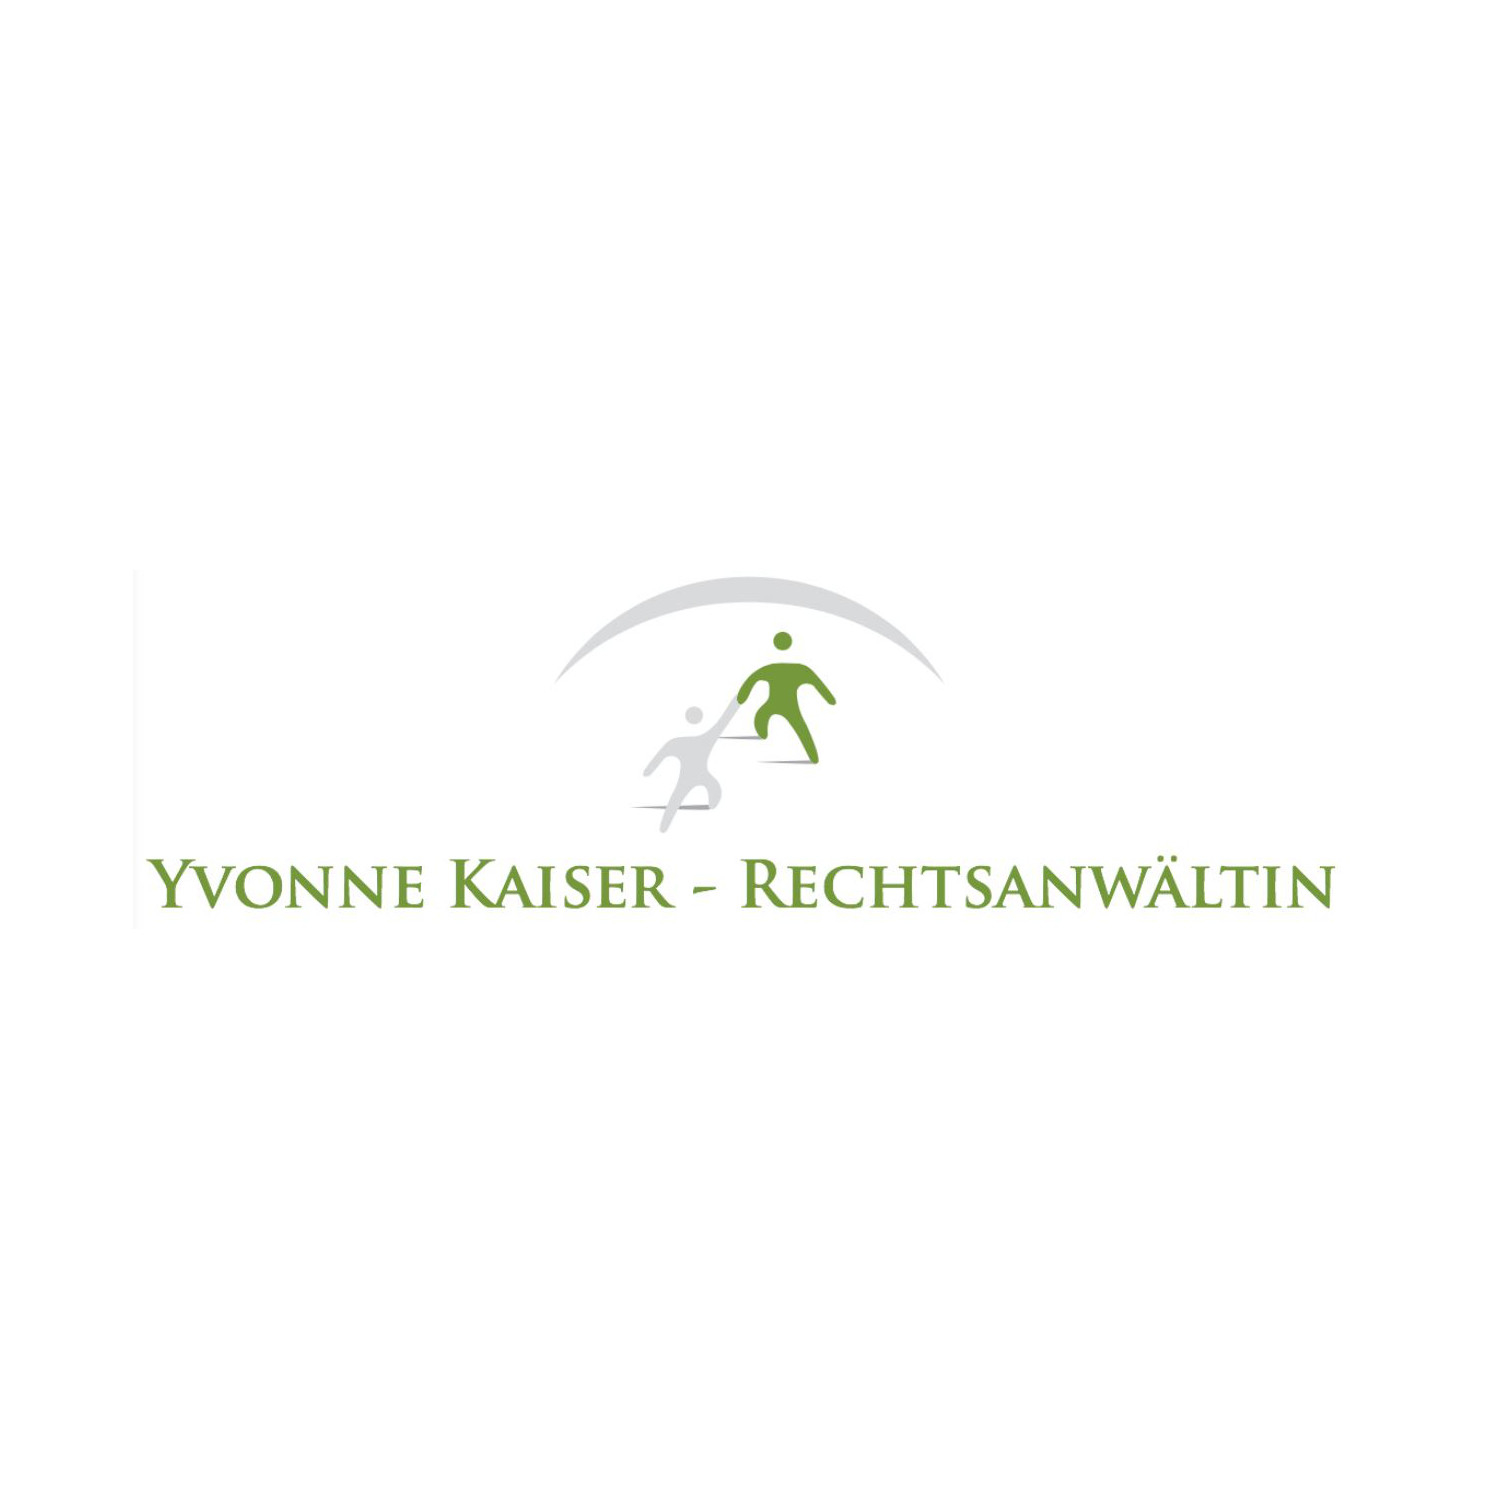 Rechtsanwältin Yvonne Kaiser Logo